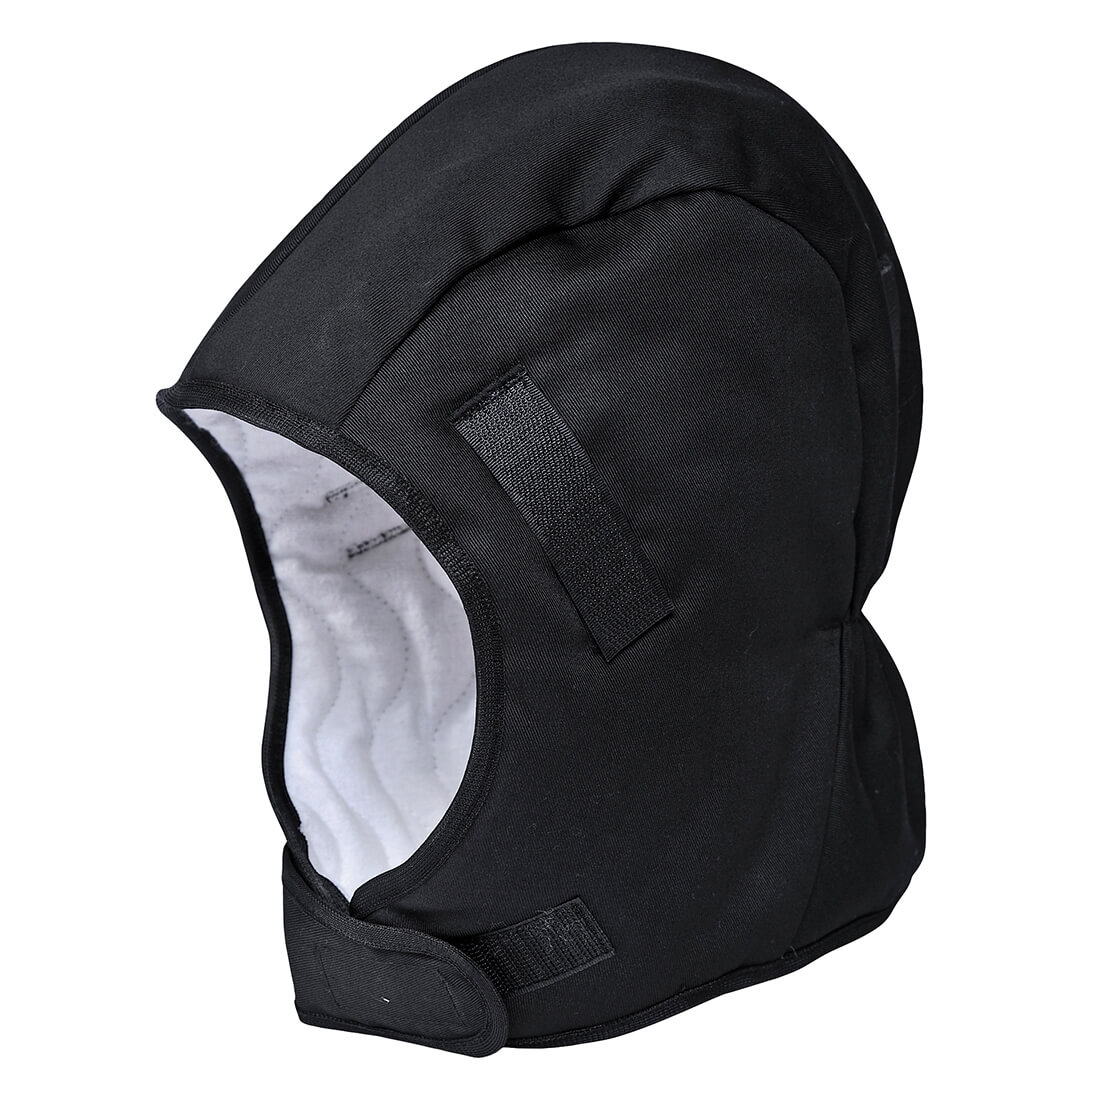 Helmet Winter Liner - Personal protection